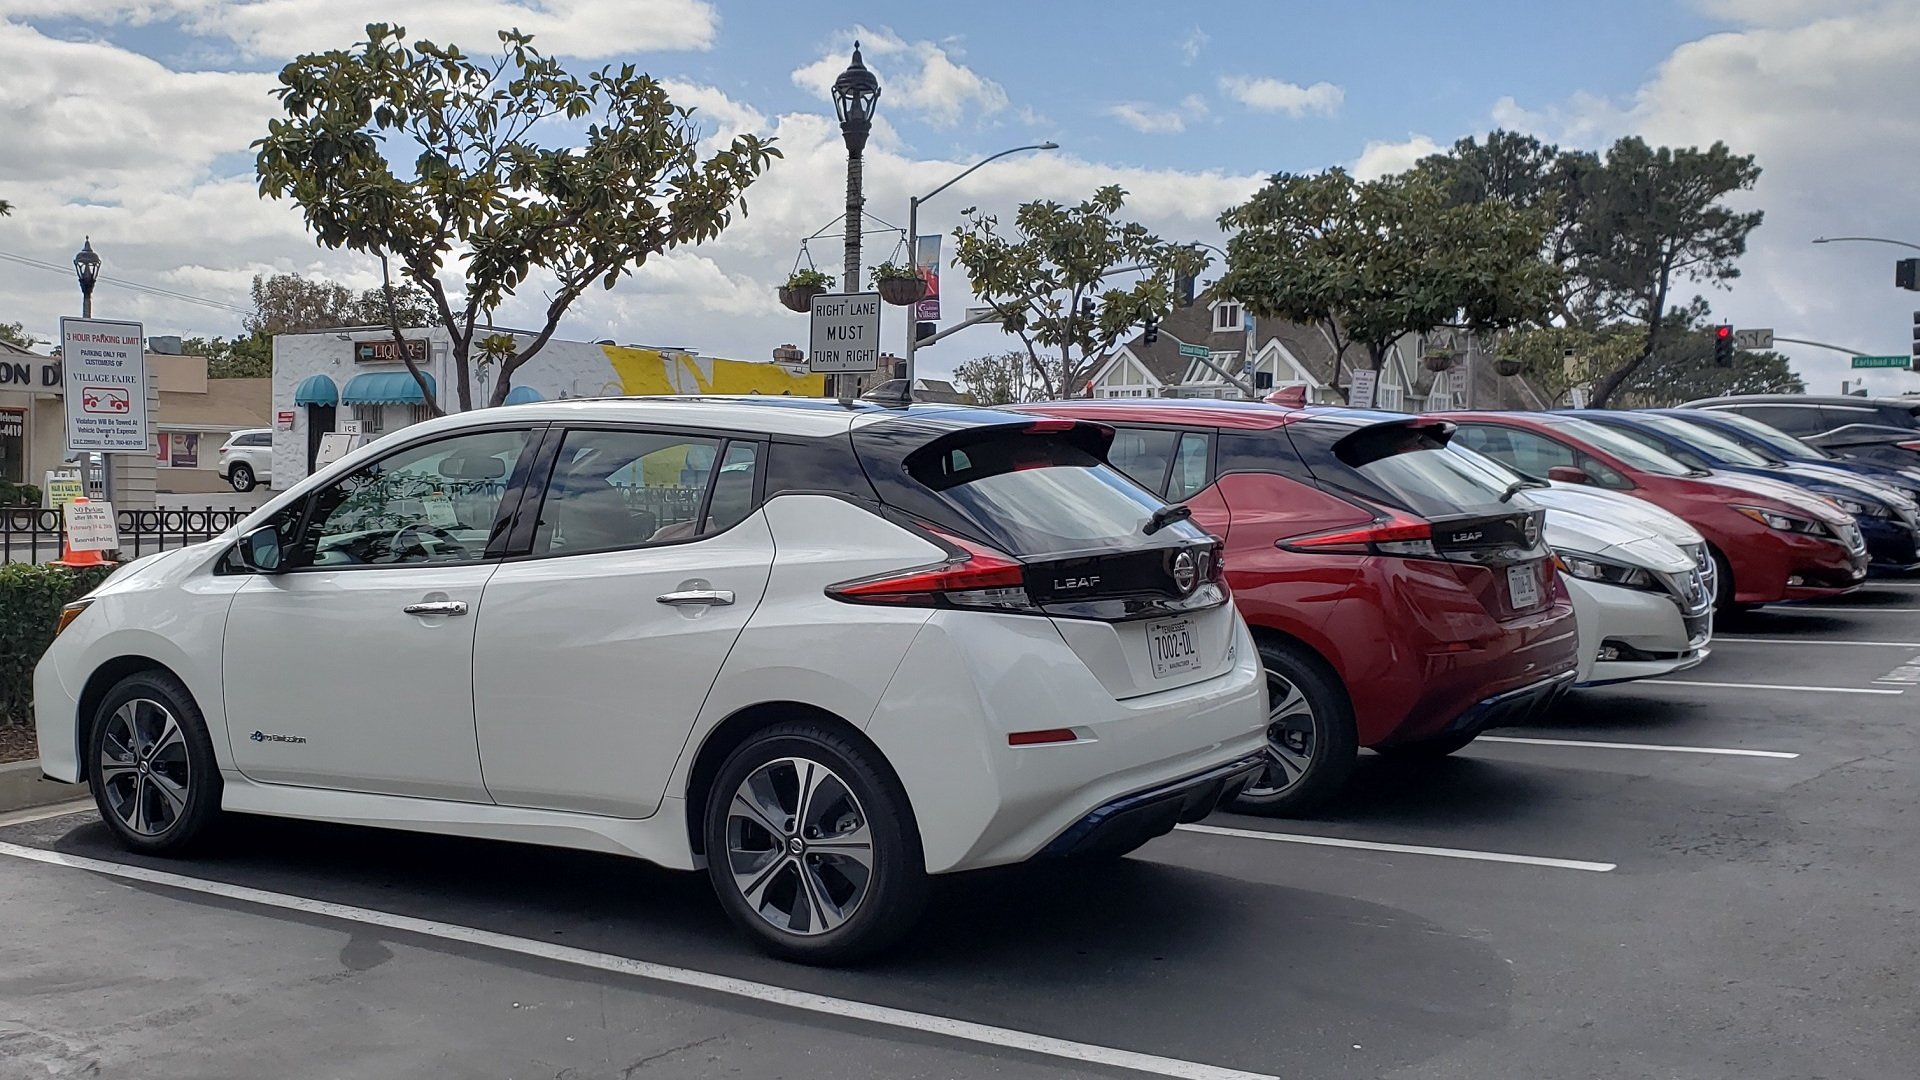 2019 Nissan Leaf Plus, San Diego area, Feb 2019